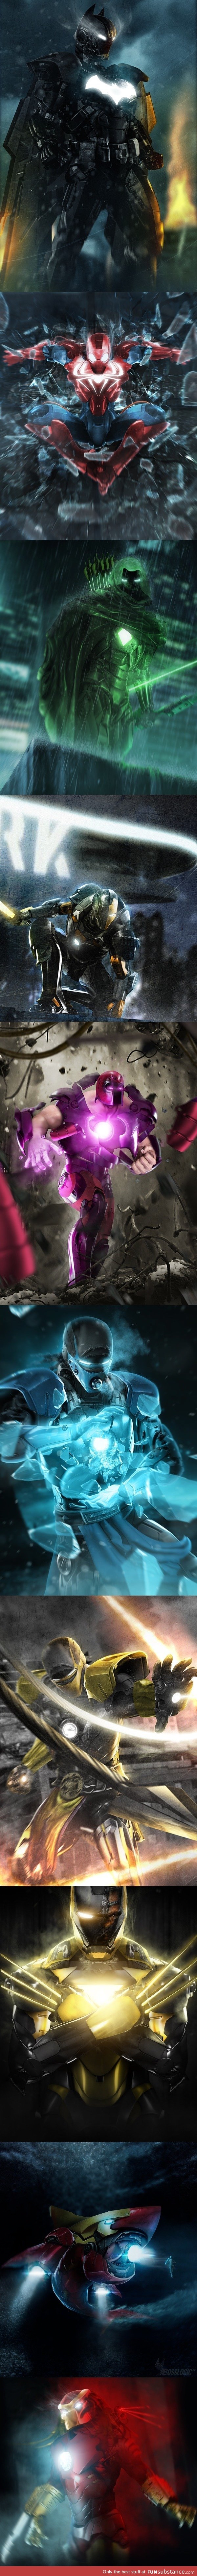 Iron man mashups